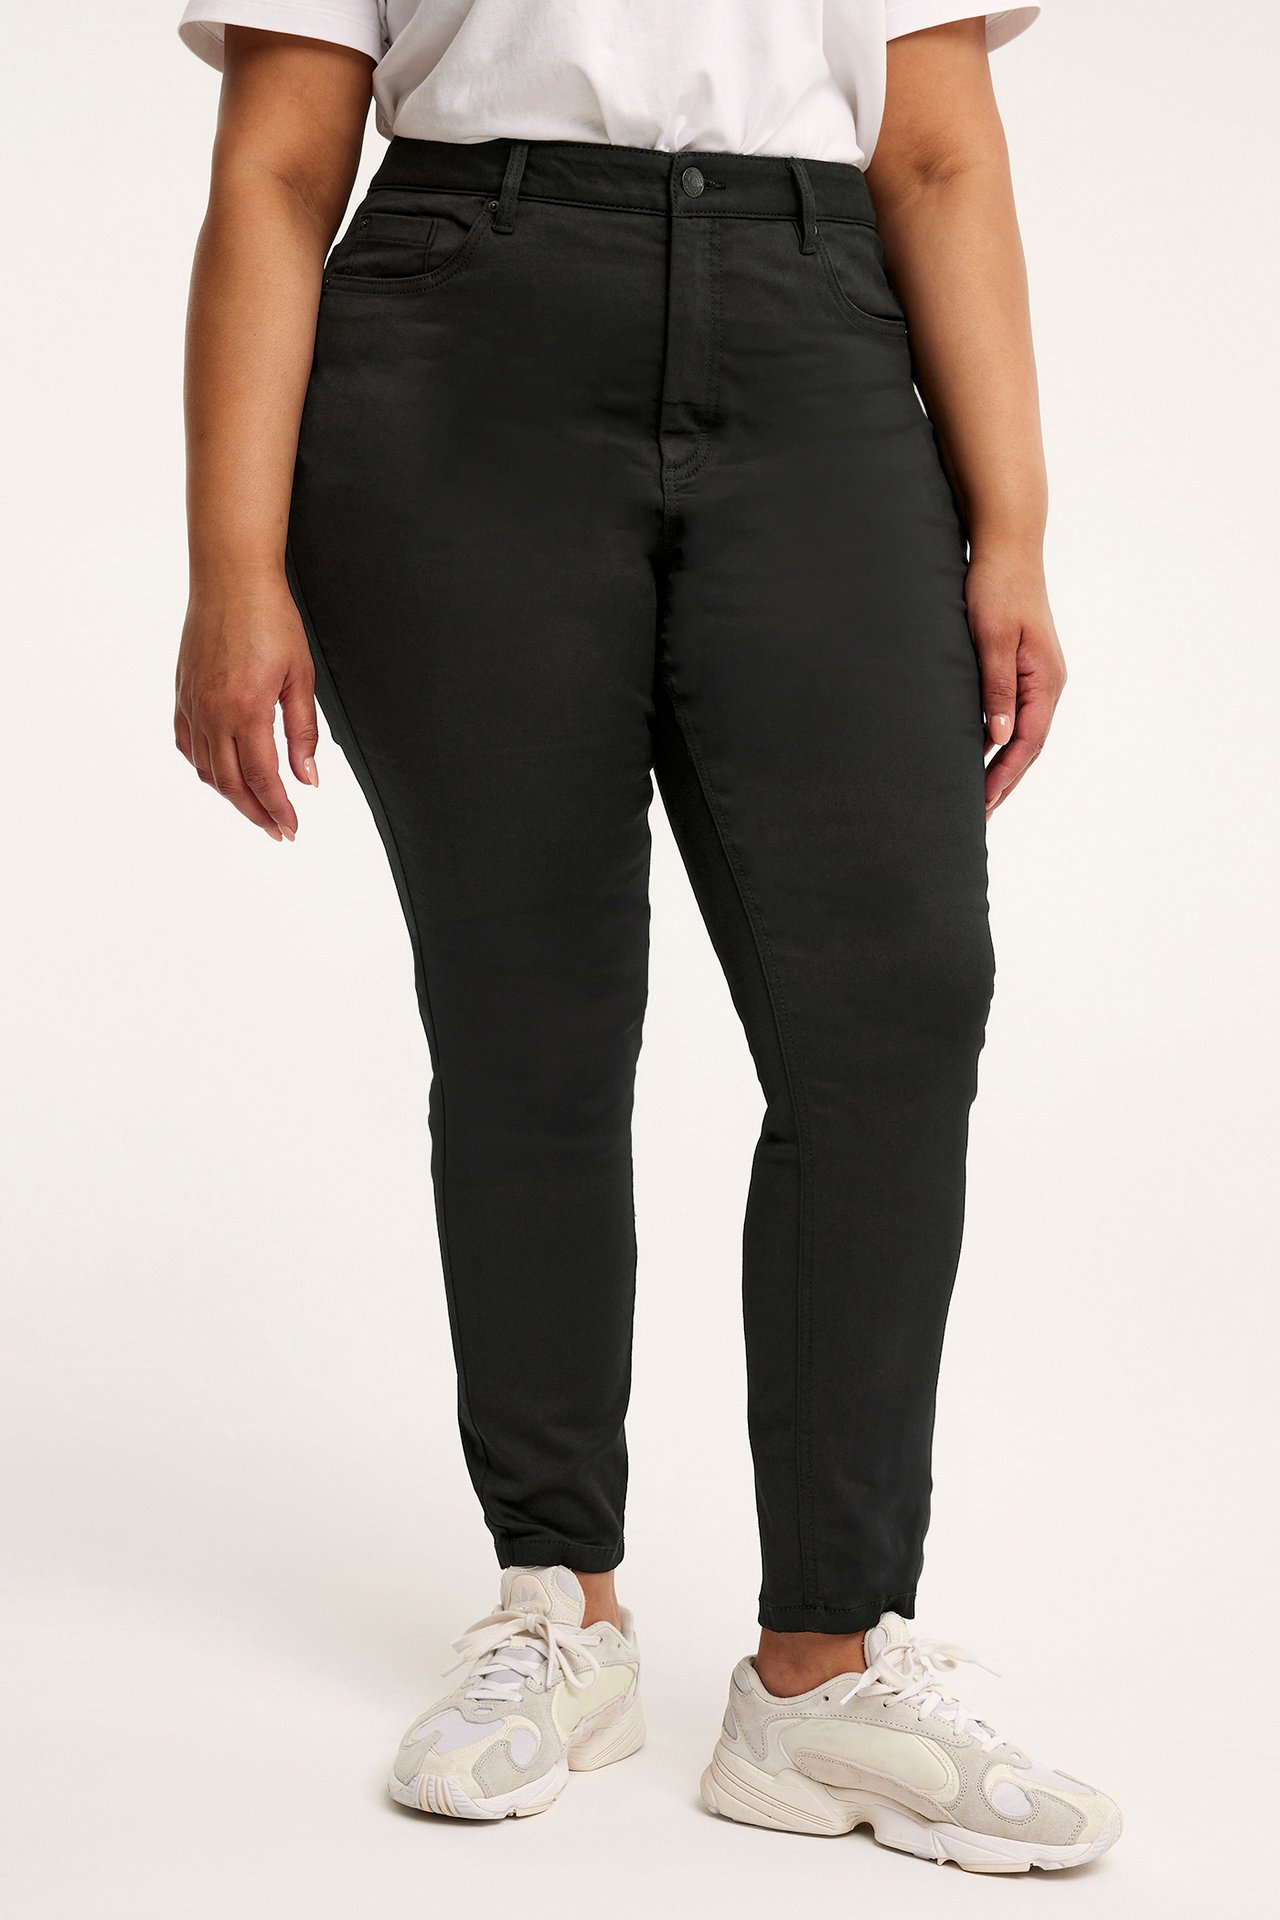 Ebba slim jeans short leg - Musta - 172cm / Storlek: 50S - 3